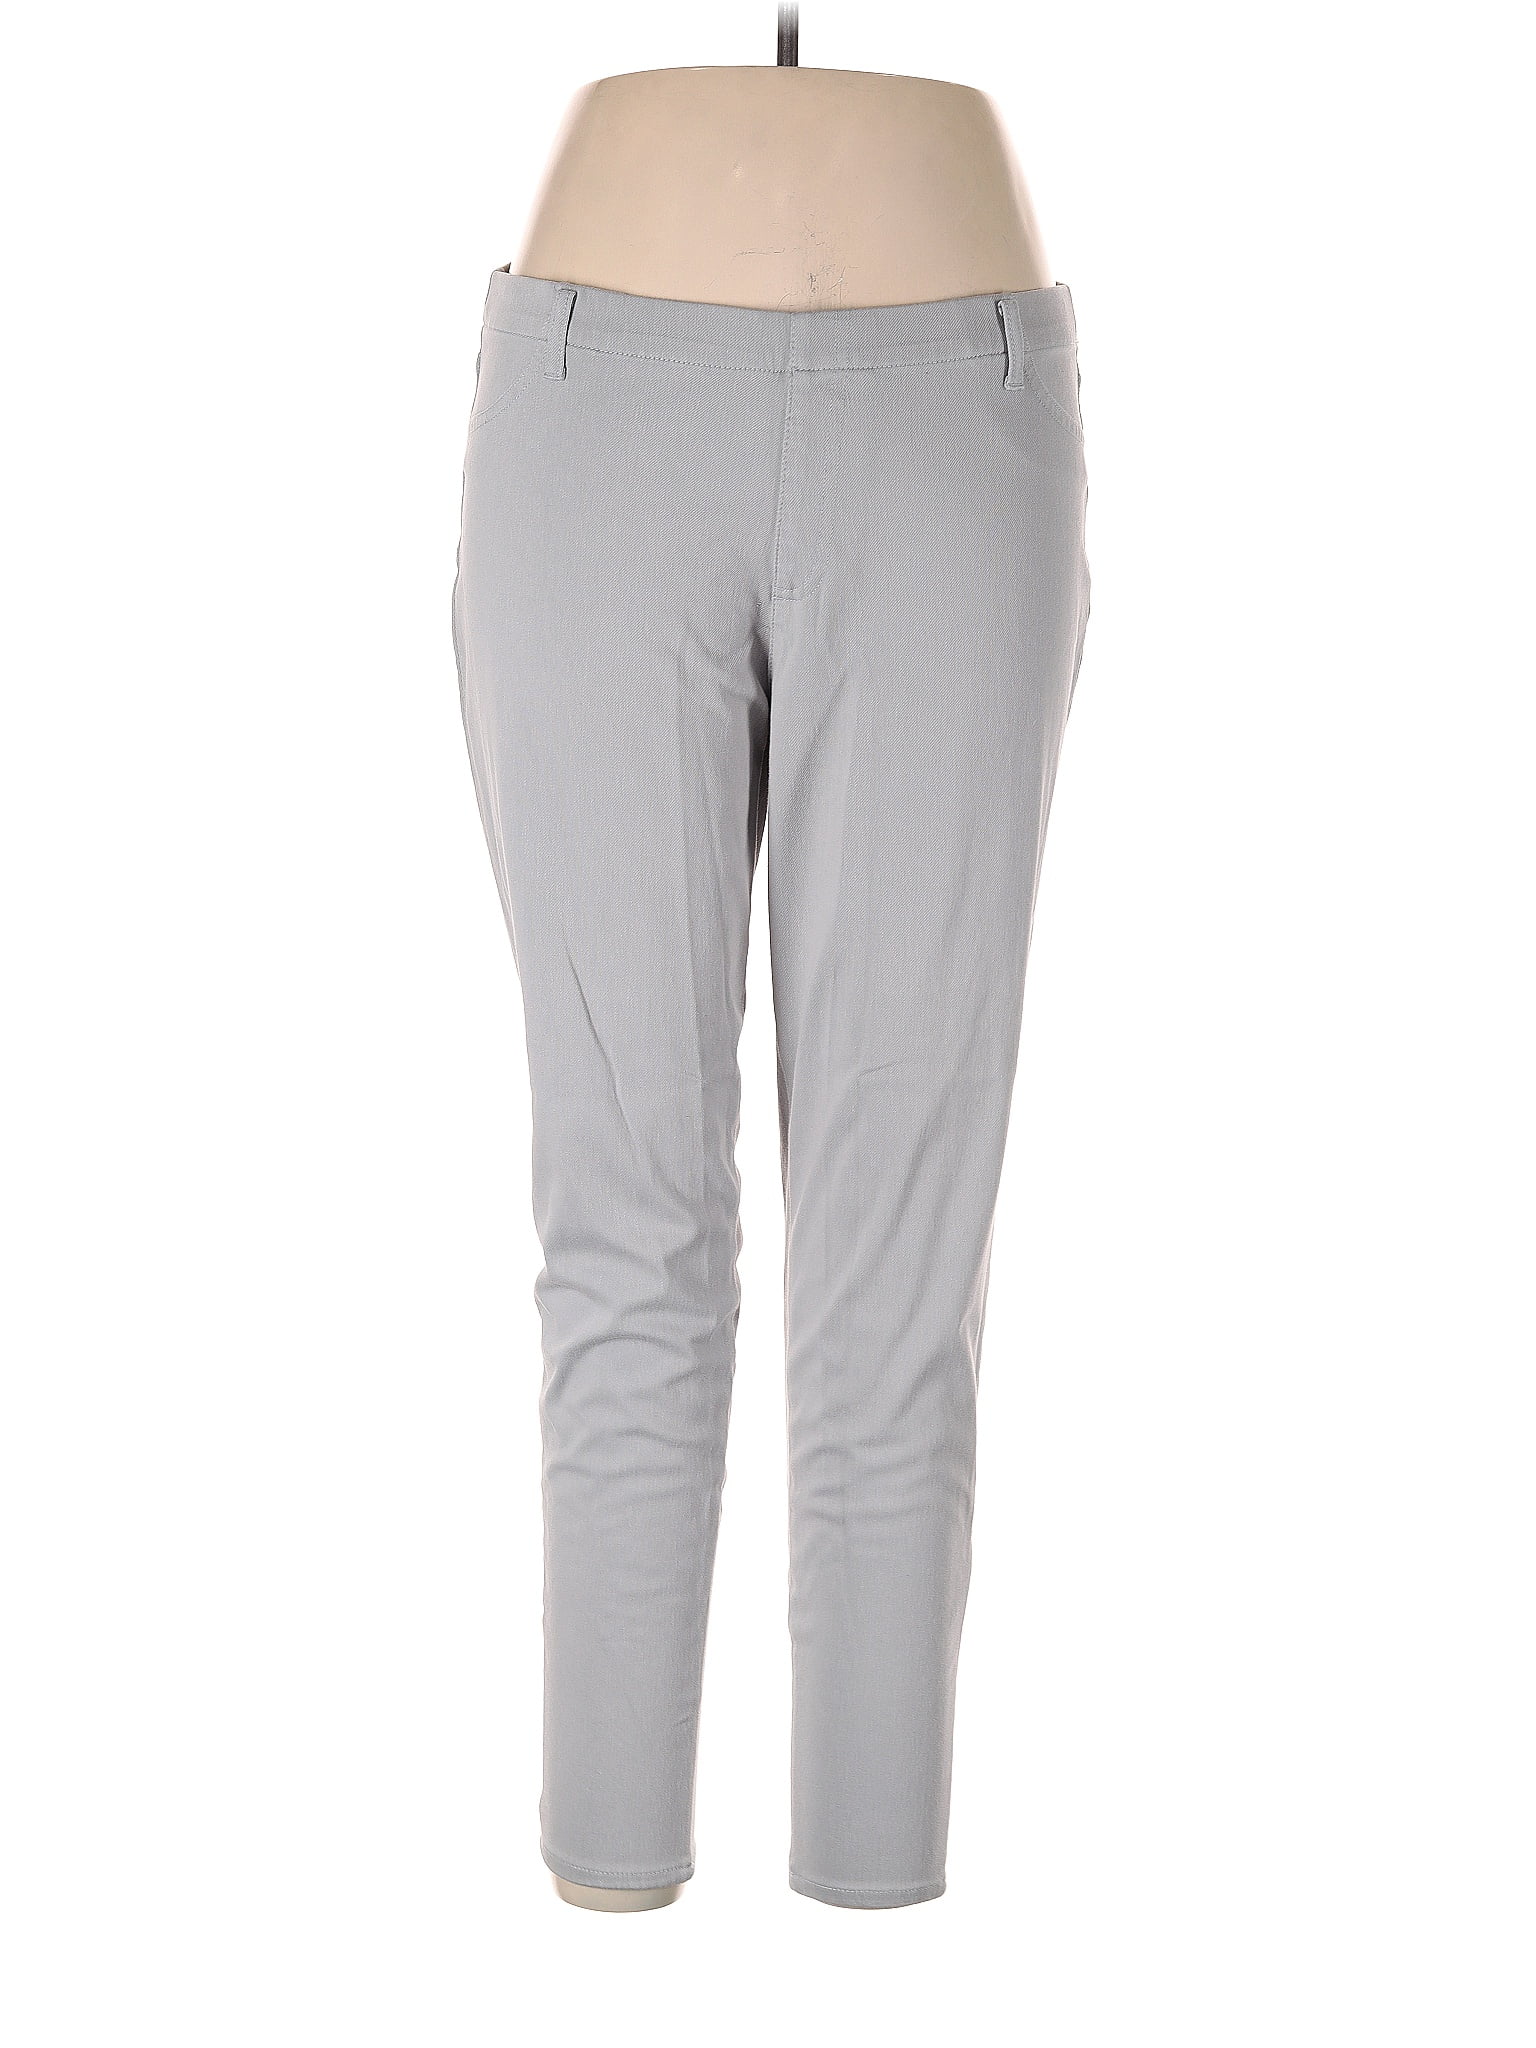 Faded Glory Gray Dress Pants Size 2X (Plus) - 37% off